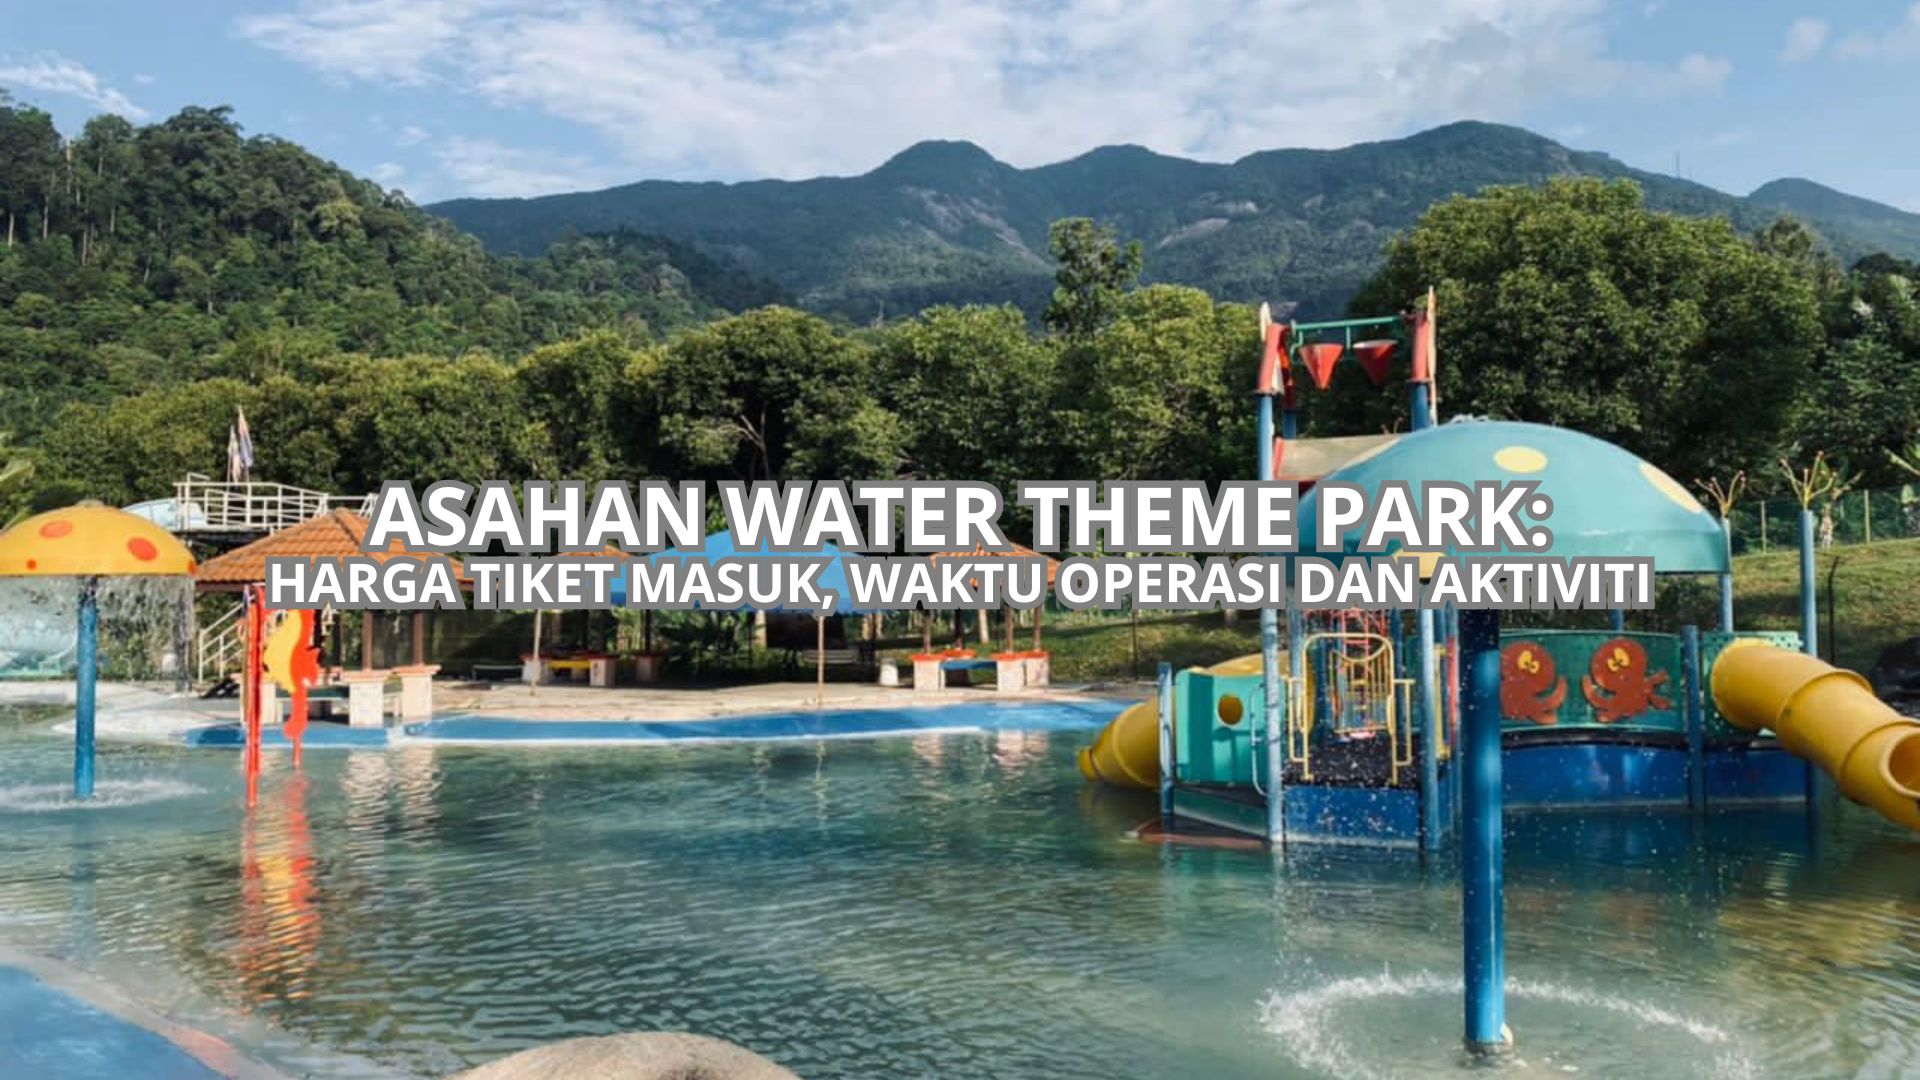 Asahan Water Theme Park Cover